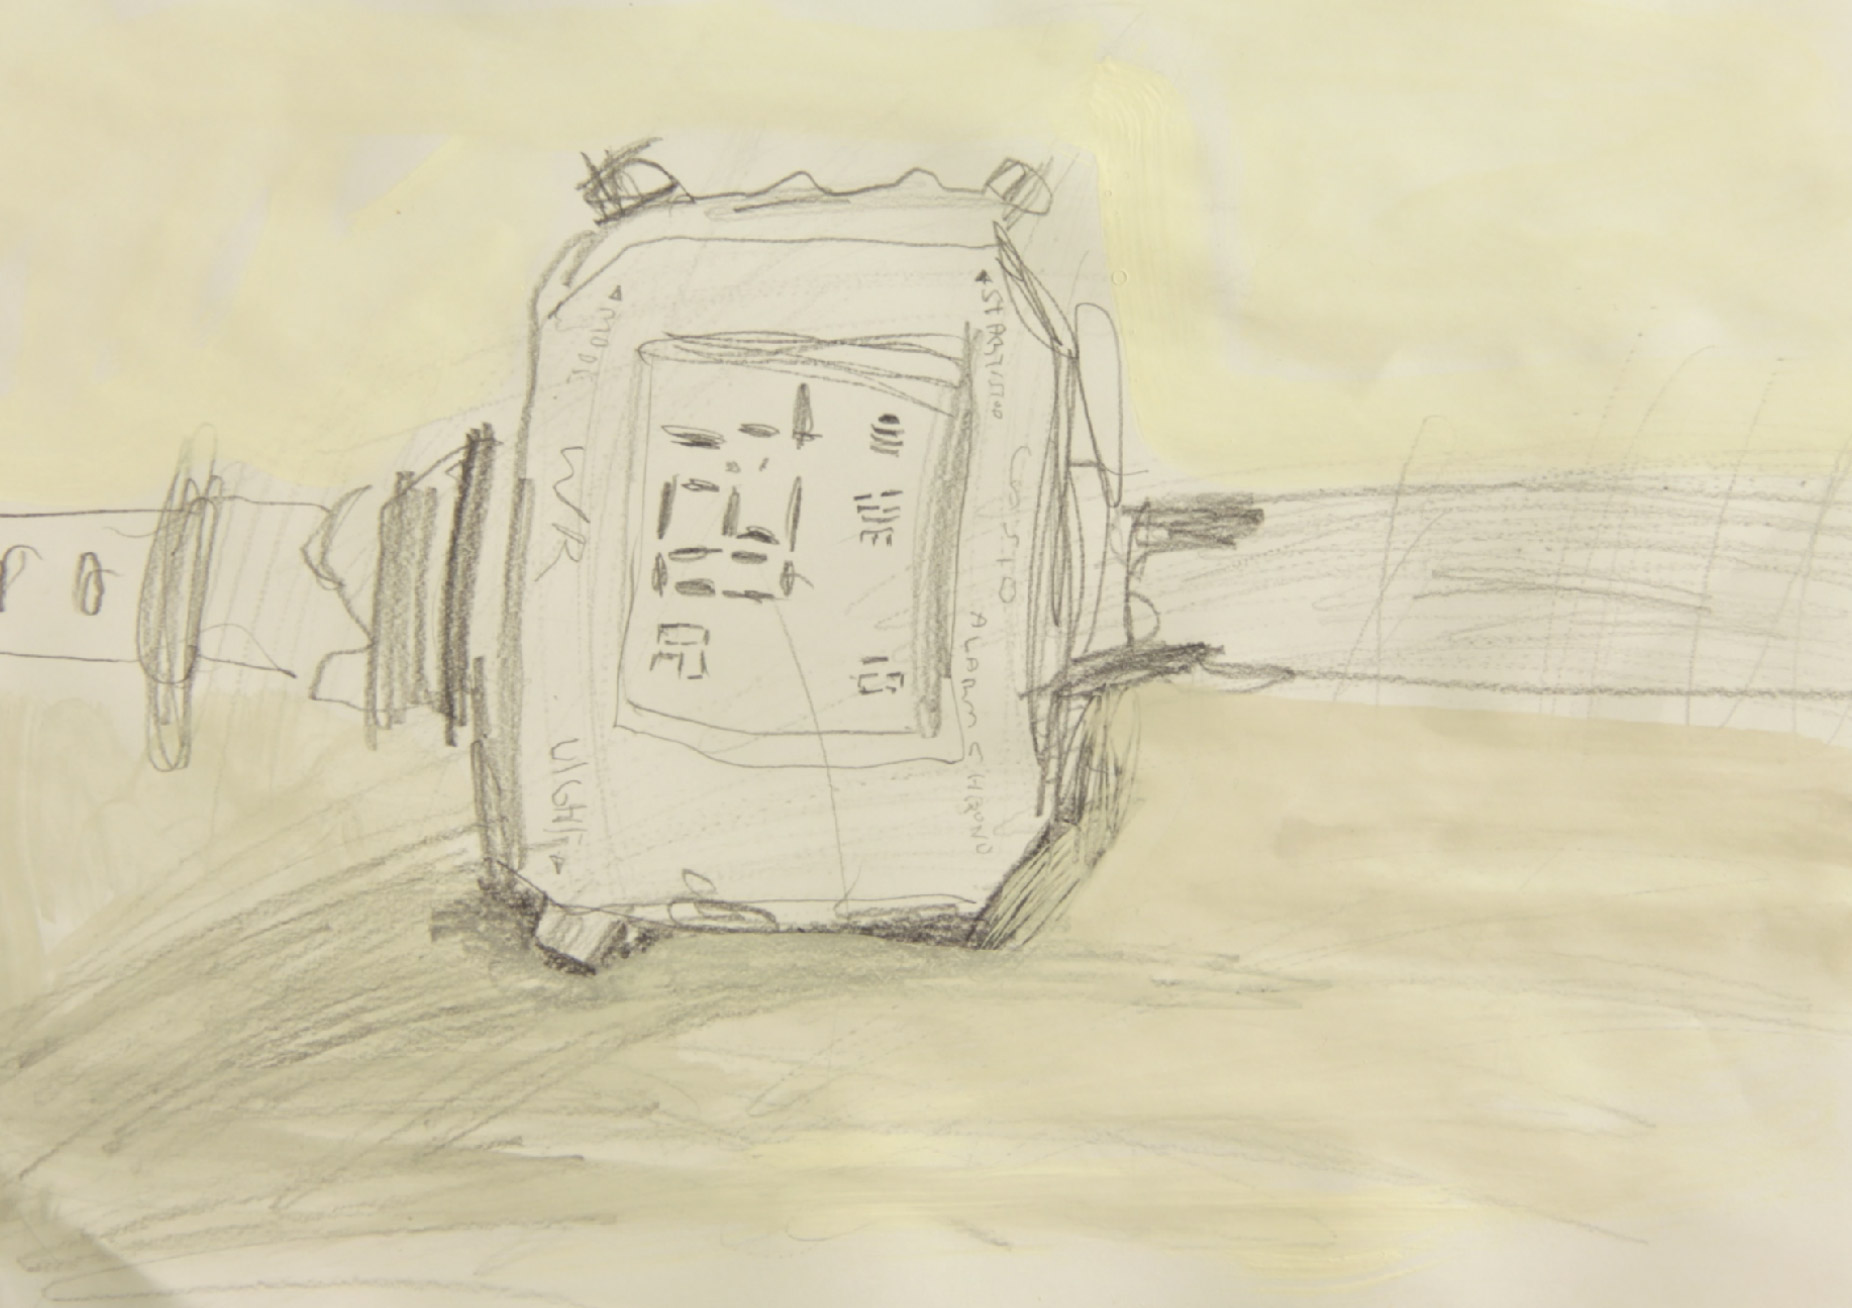 Pencil drawing of a digital watch